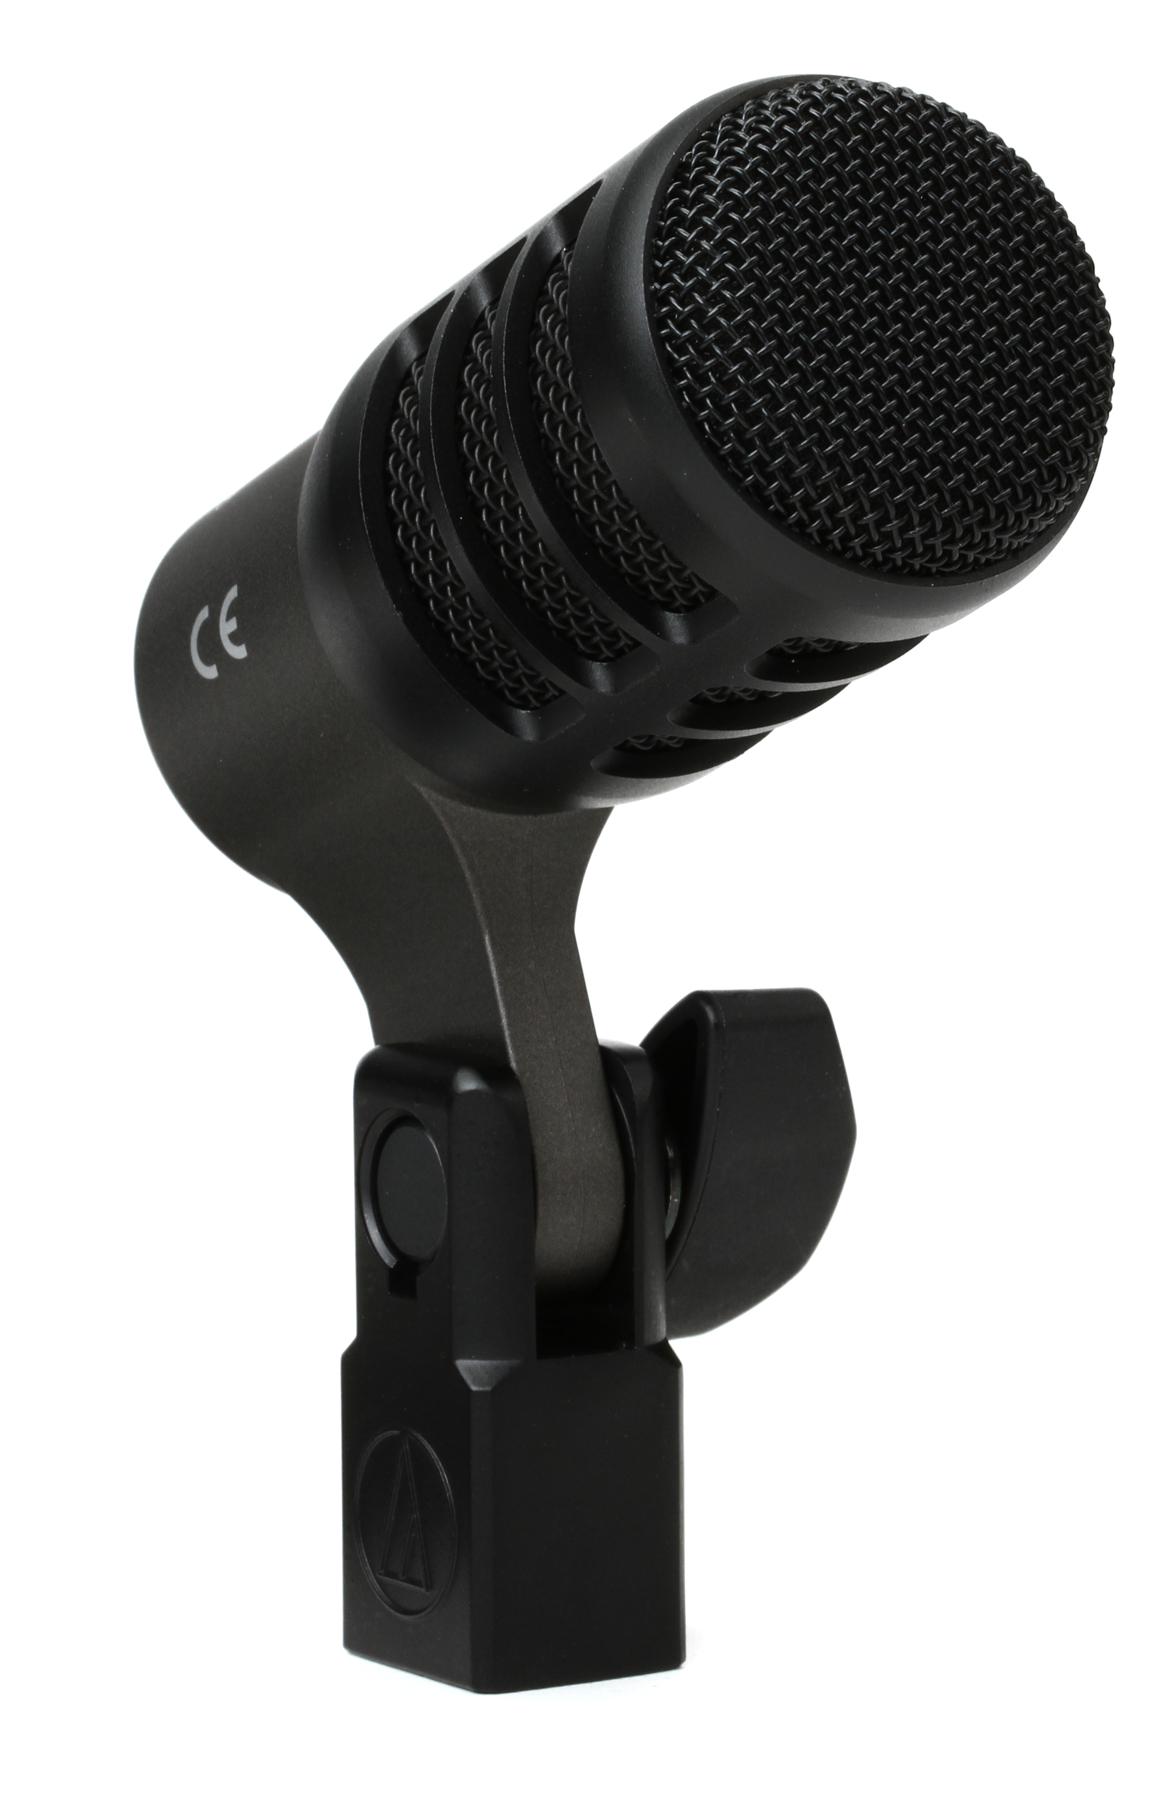 6. Audio-Technica ATM230 Hypercardioid Dynamic Microphone